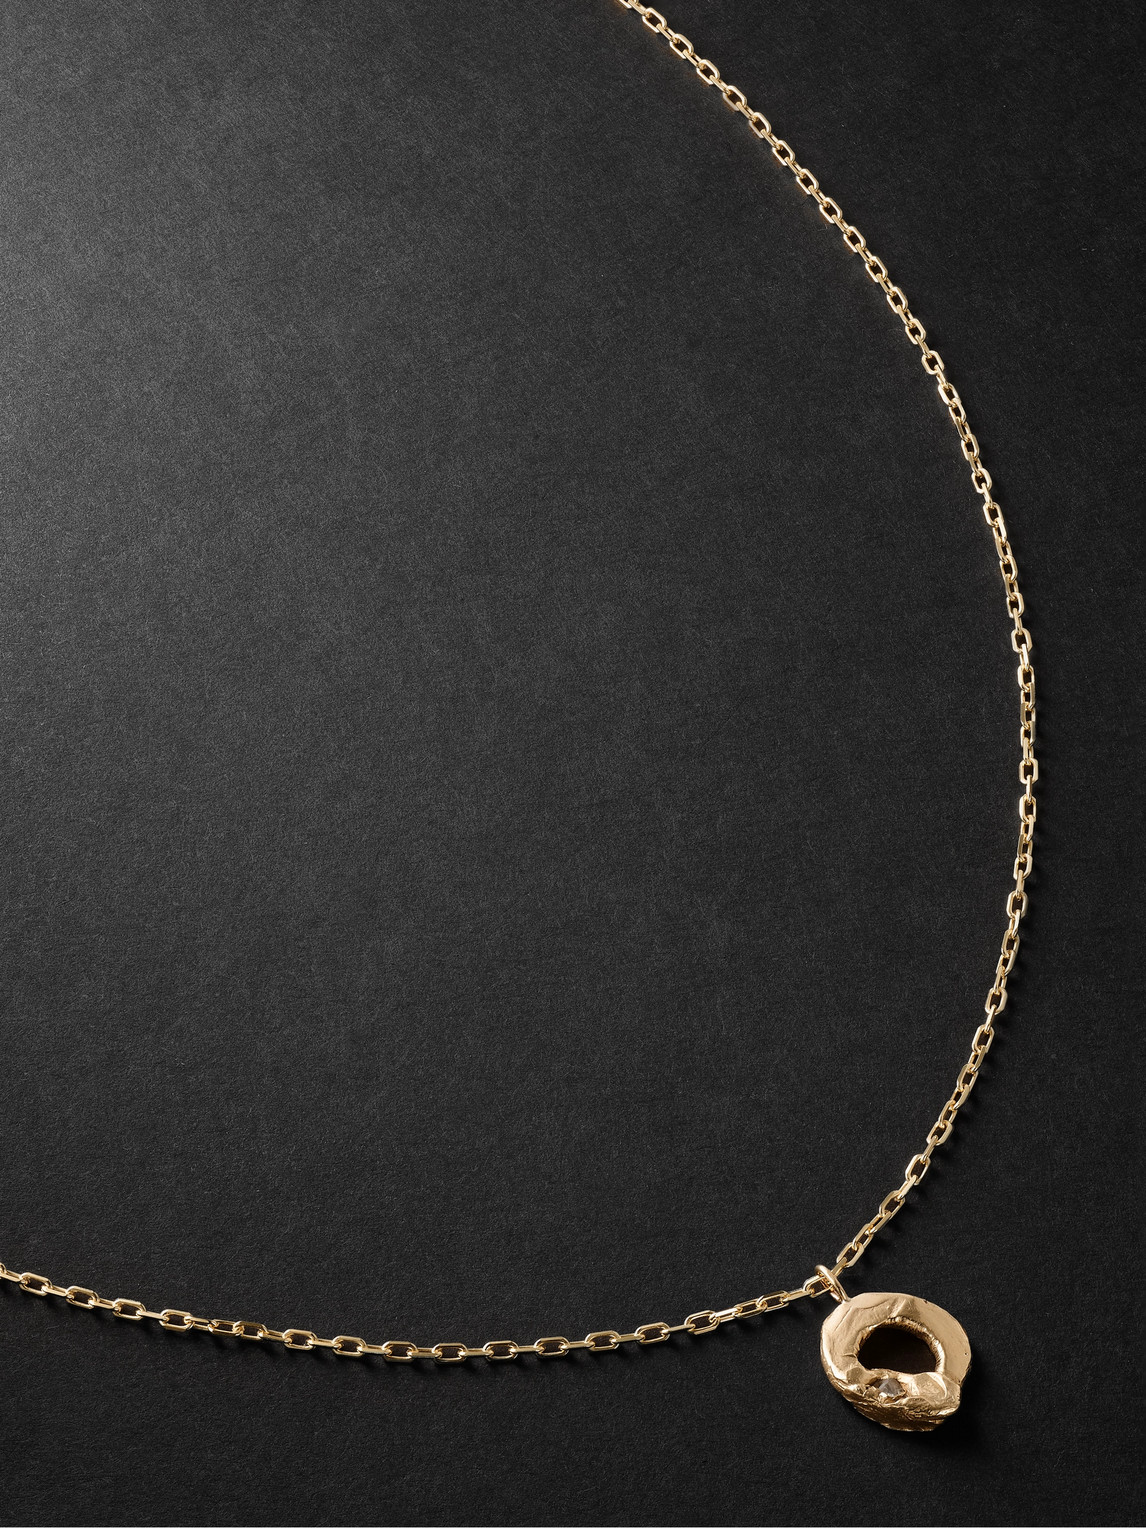 Alice Made This Ocean Diamonds Wallace 9-karat Gold Diamond Pendant Necklace